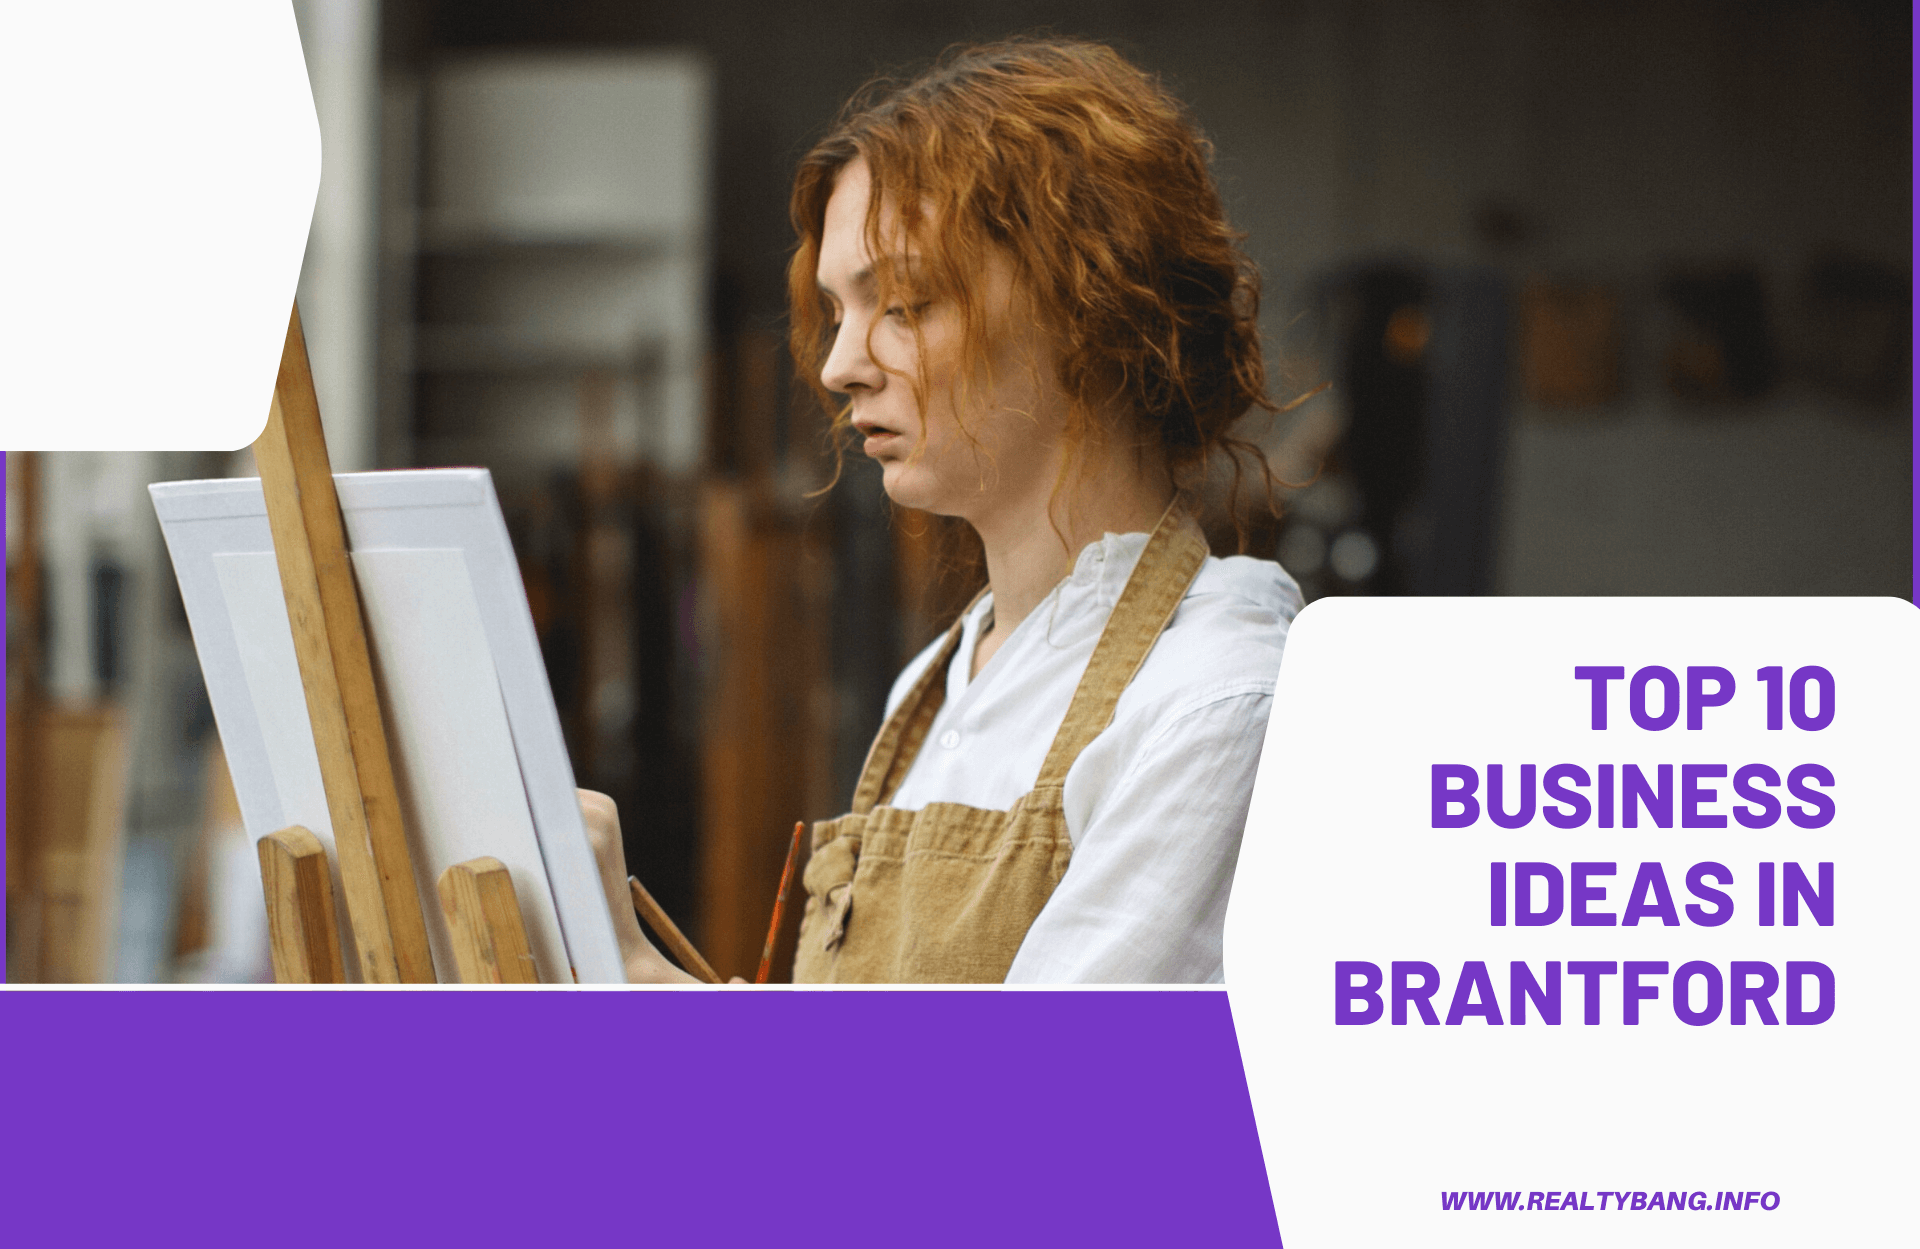 TOP 10 BUSINESS IDEAS IN BRANTFORD